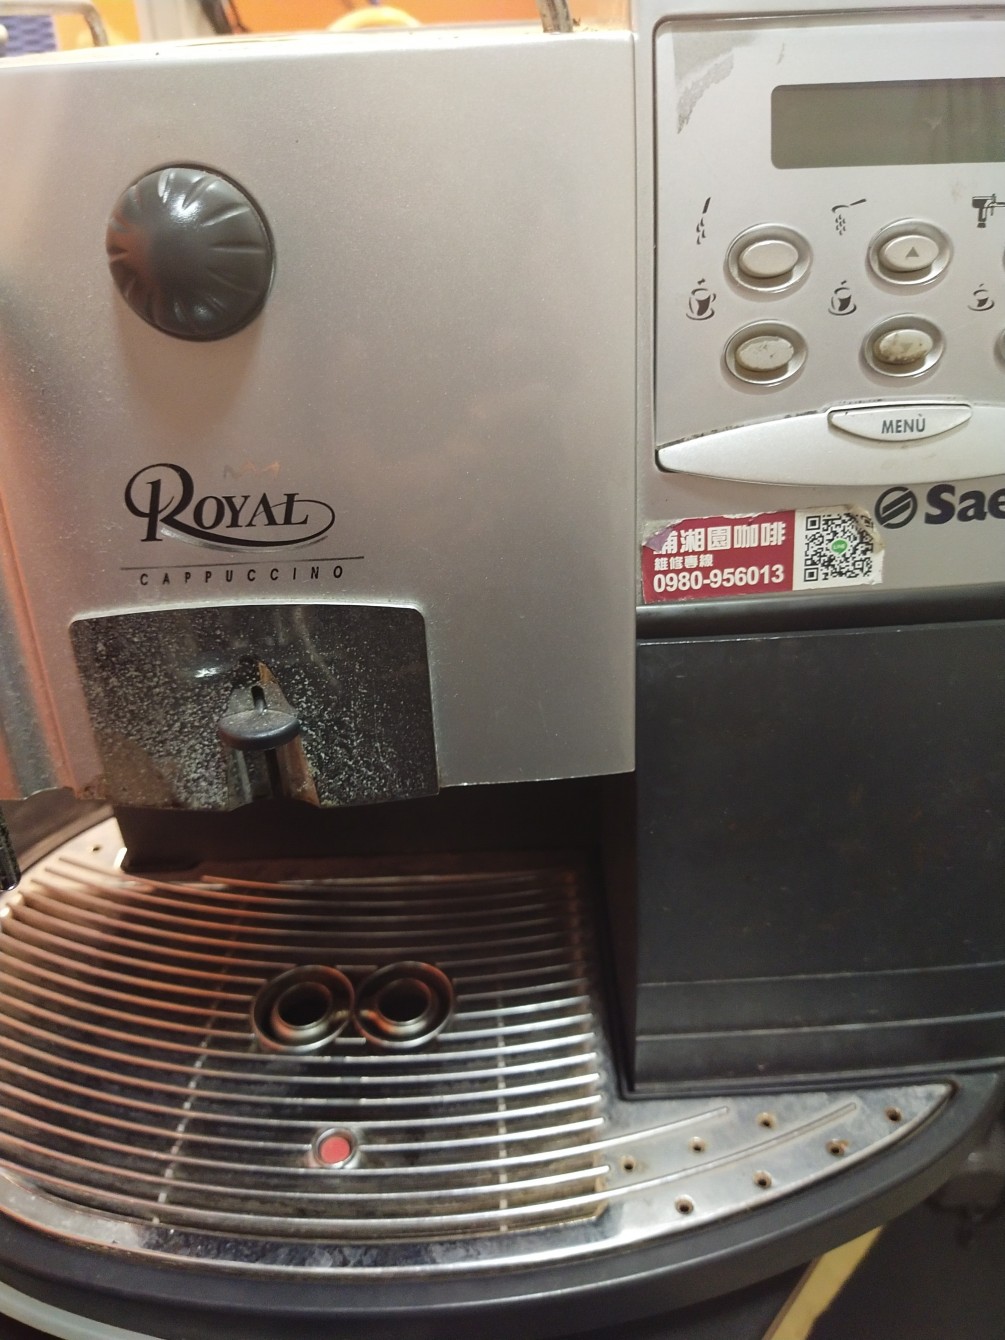 saeco-royla-全自動咖啡機--無法磨豆-刀組生鏽更新-大保養維修